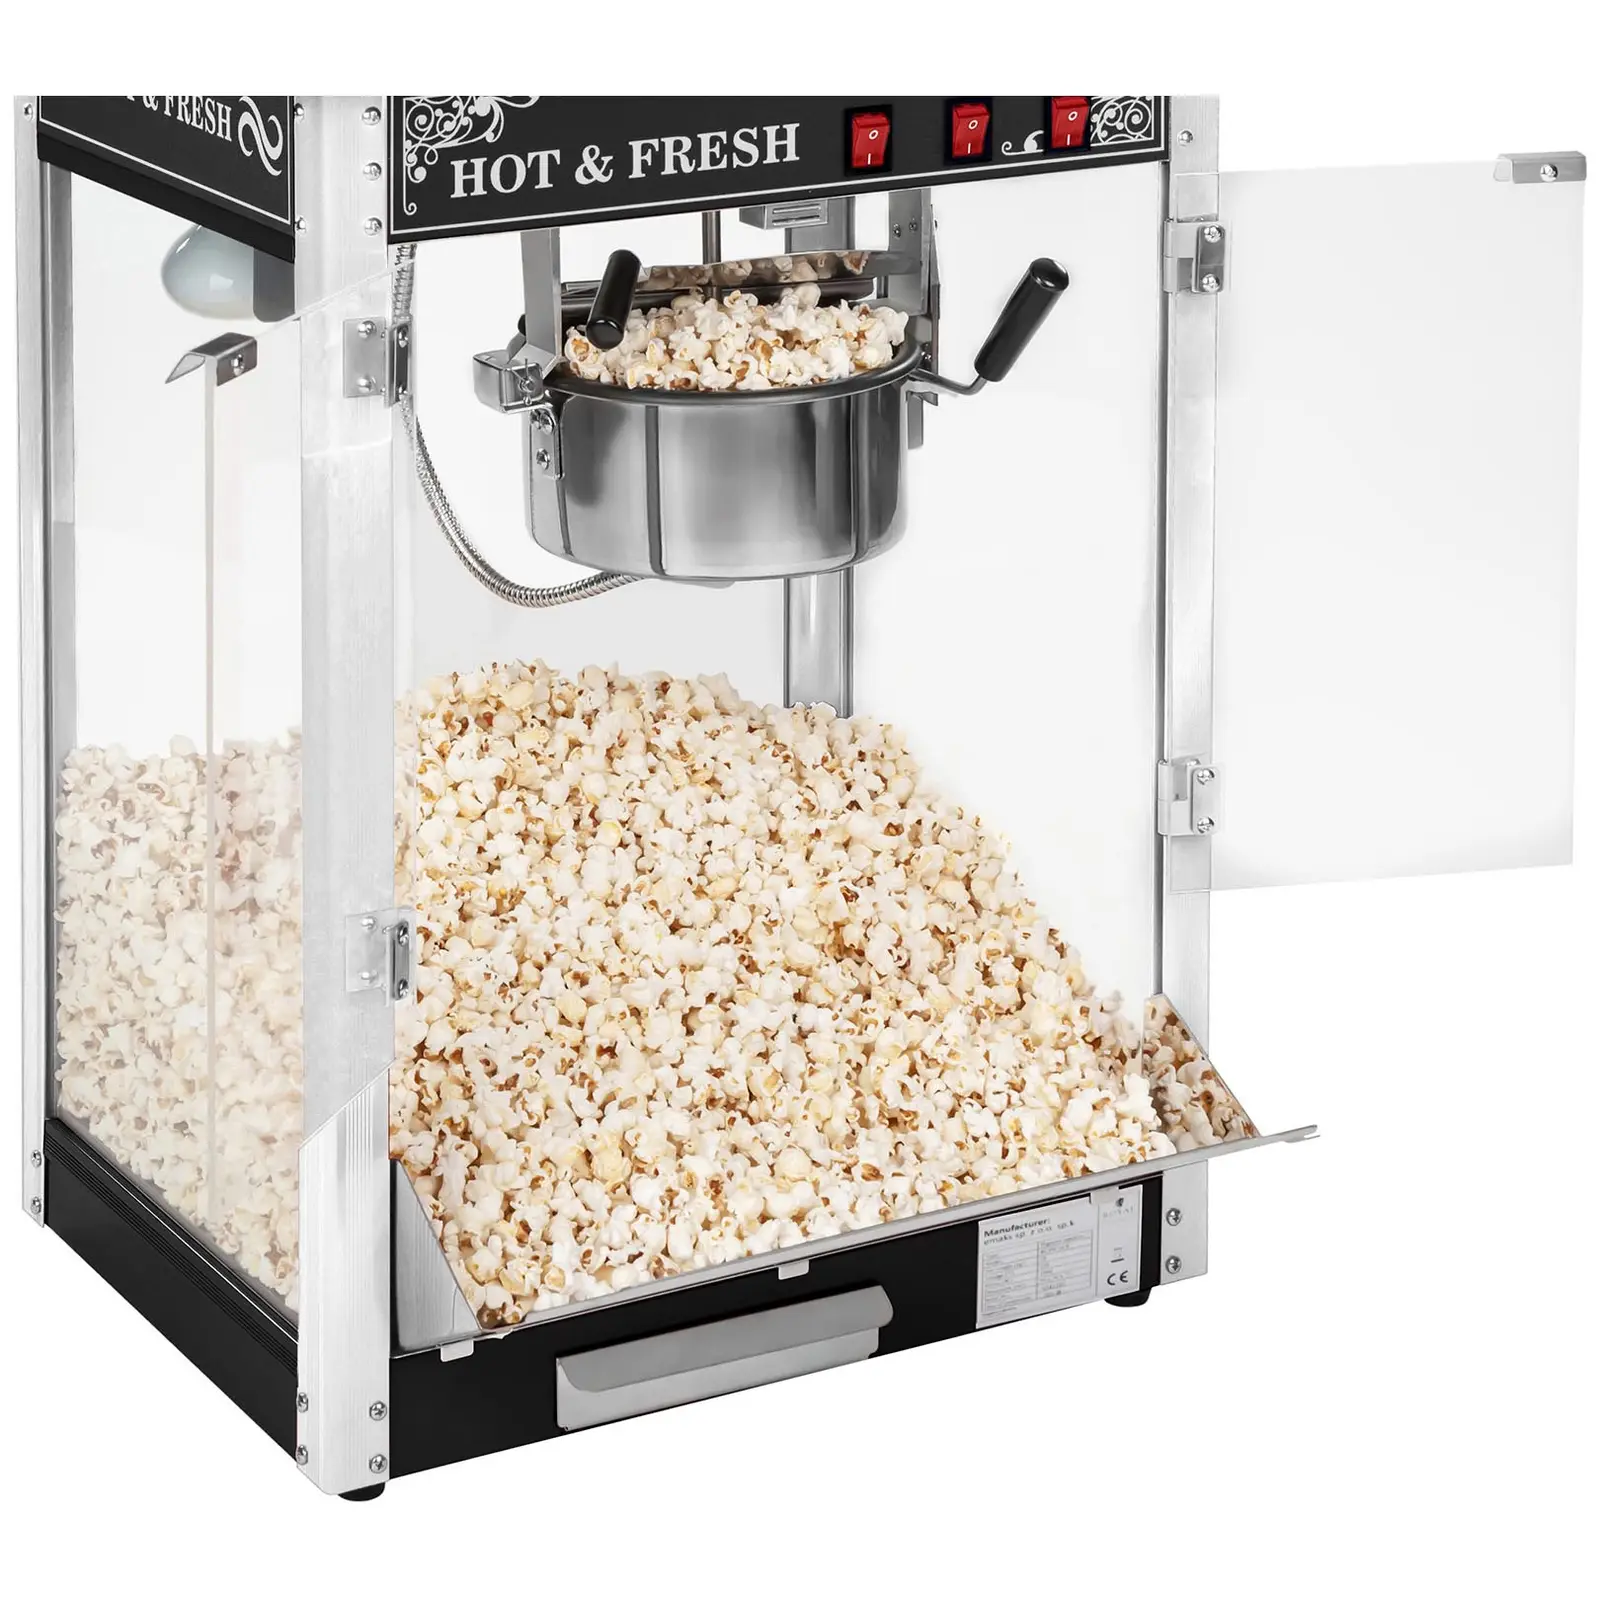 Popcornmaskine - sort tag